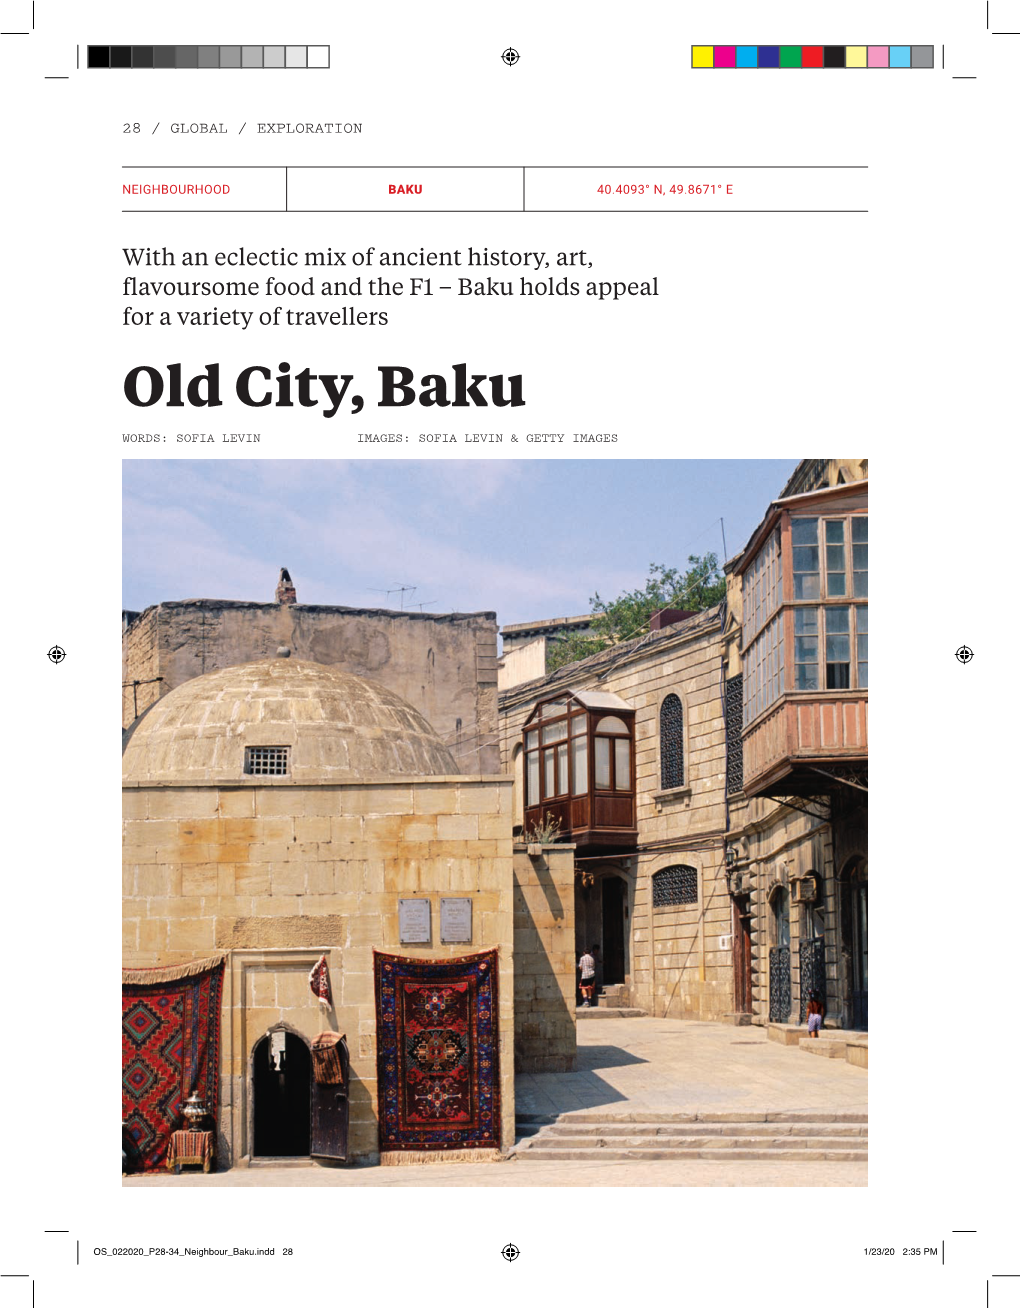 Emirates Open Skies: Baku, Old City